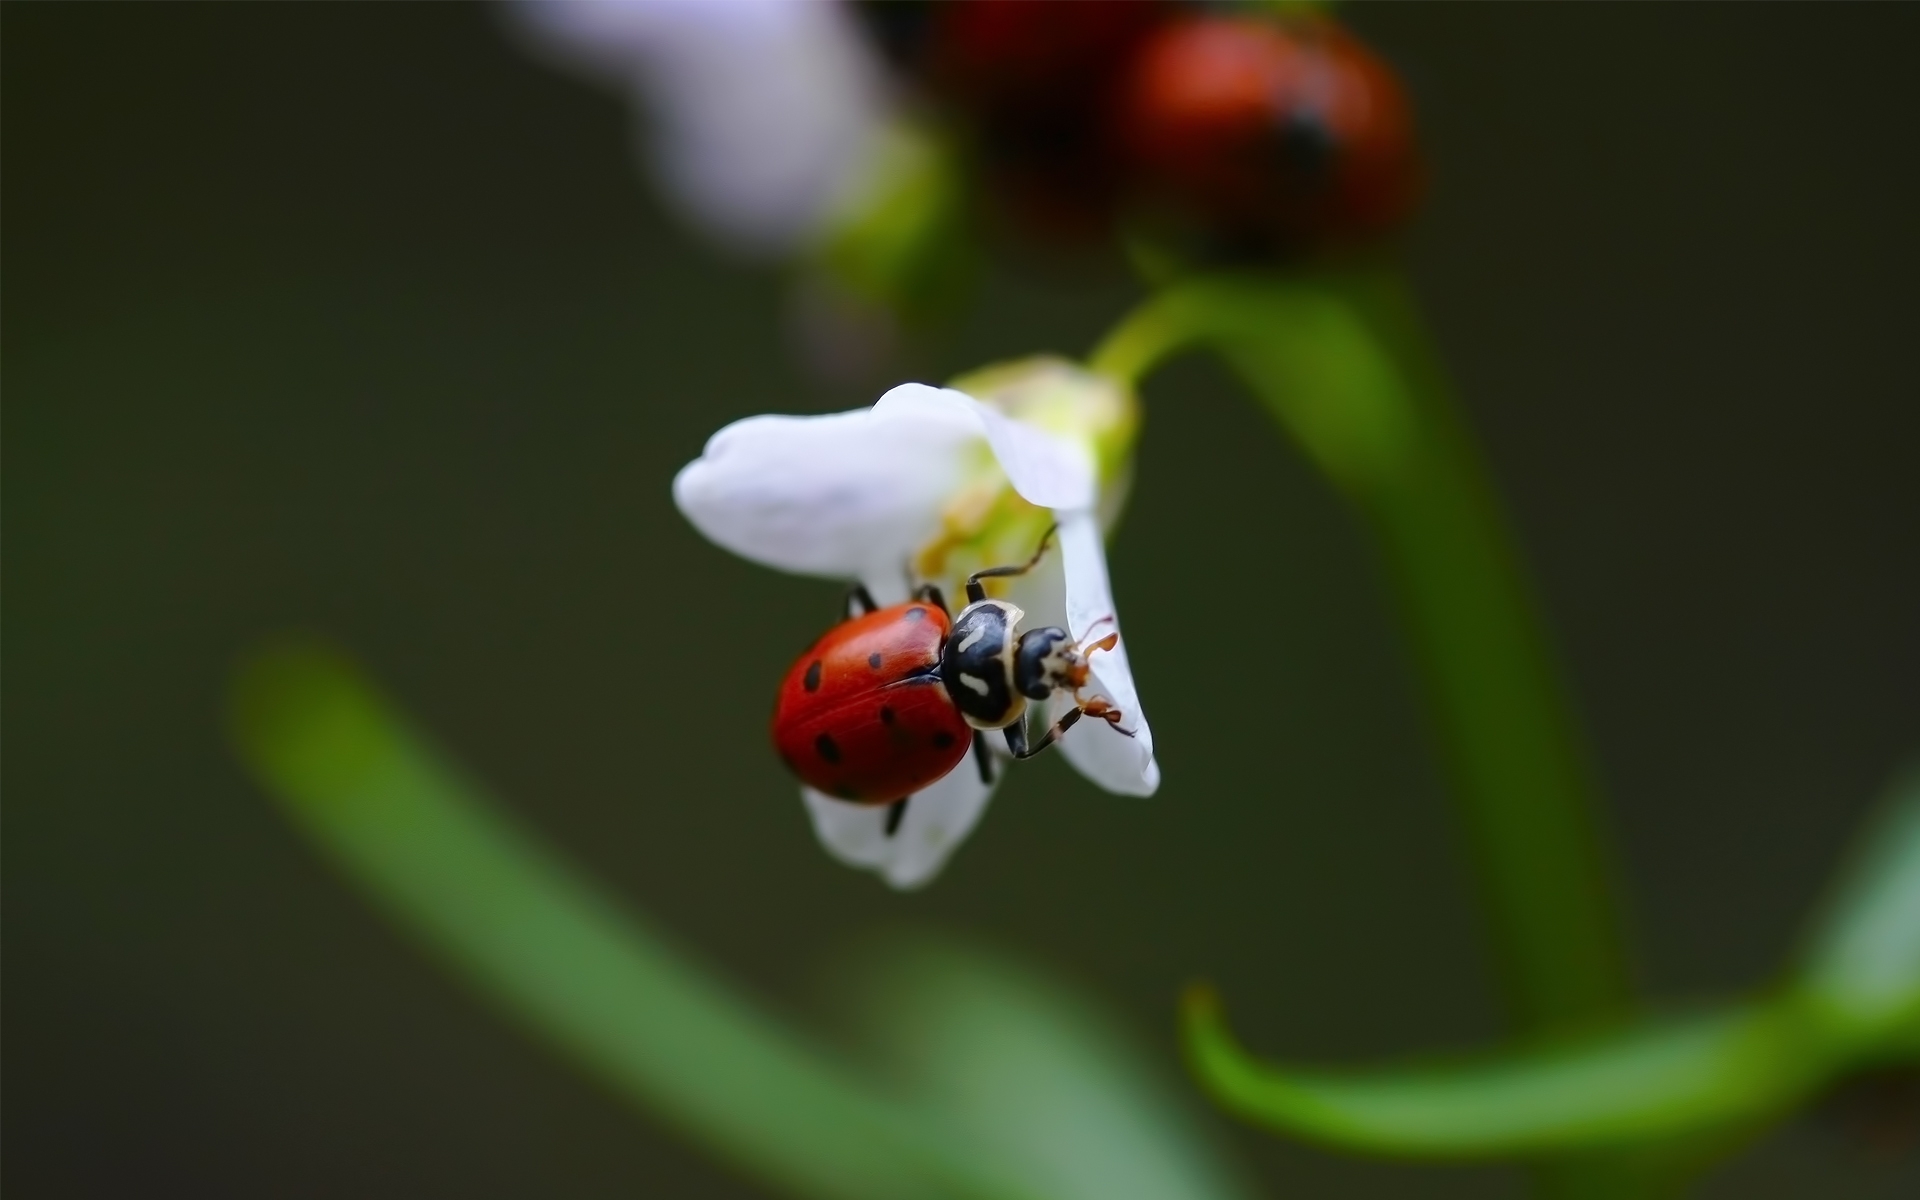 A ladybug on a white flower.